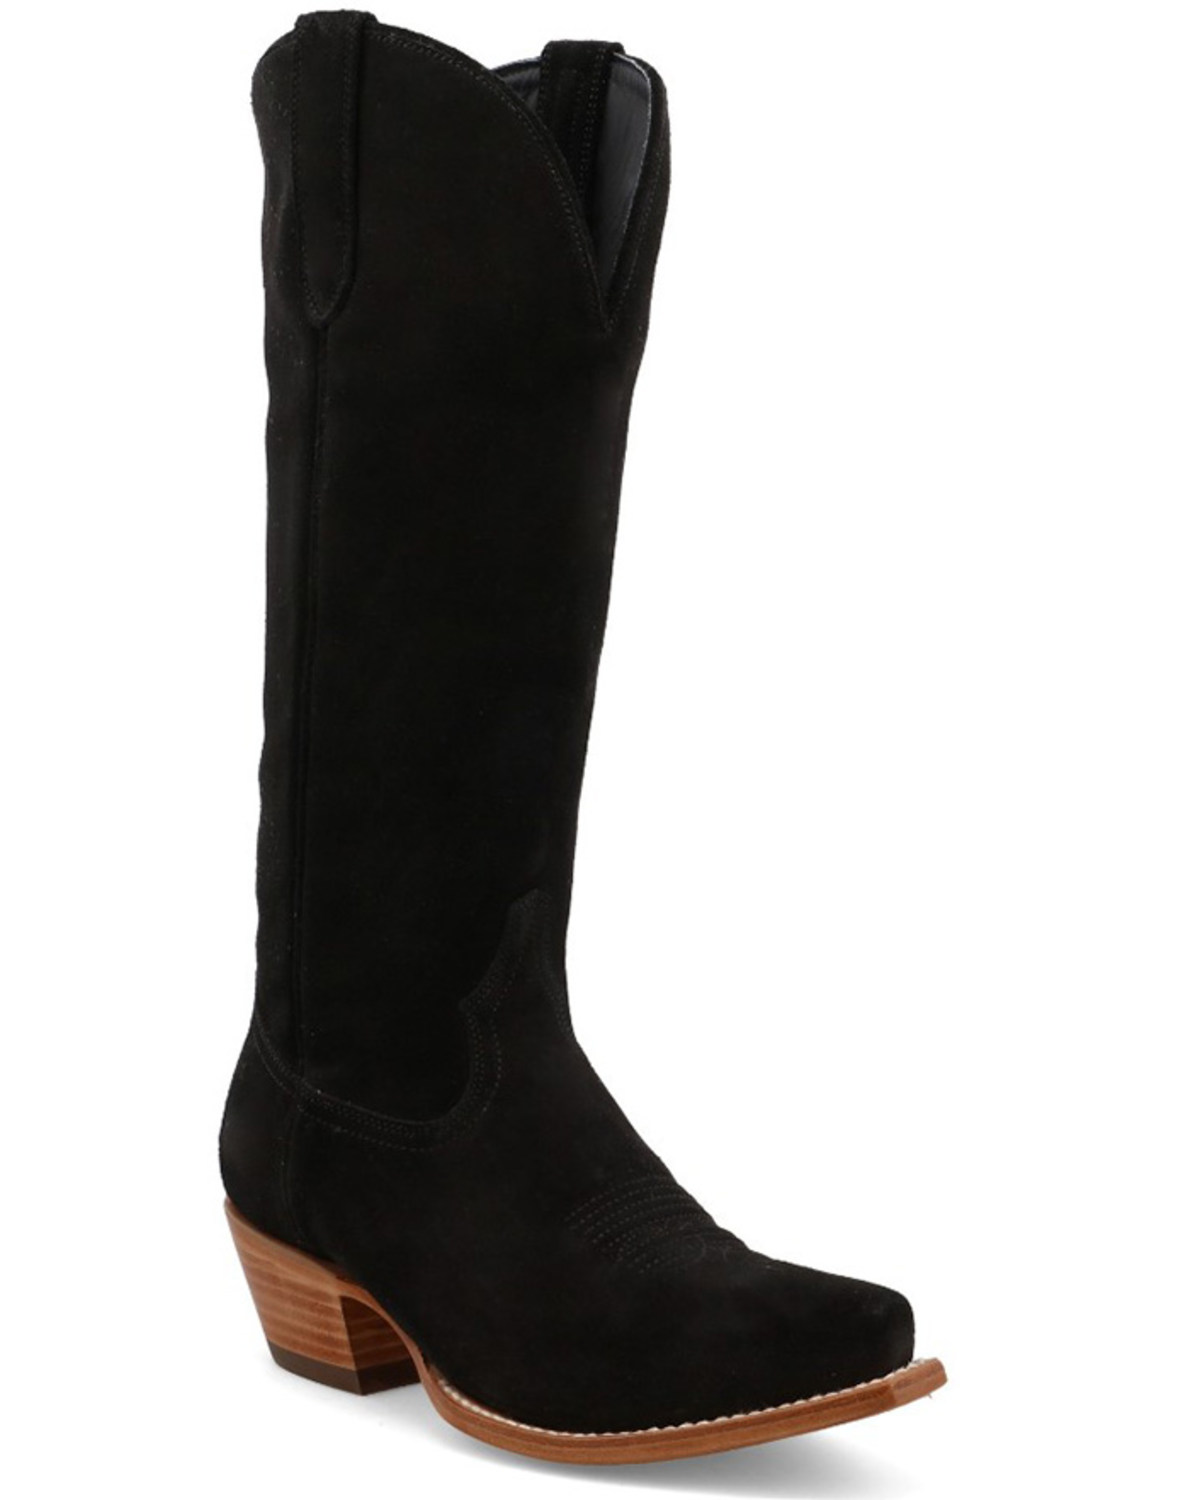 Black Star Women's Addison Tall Western Boots - Snip Toe